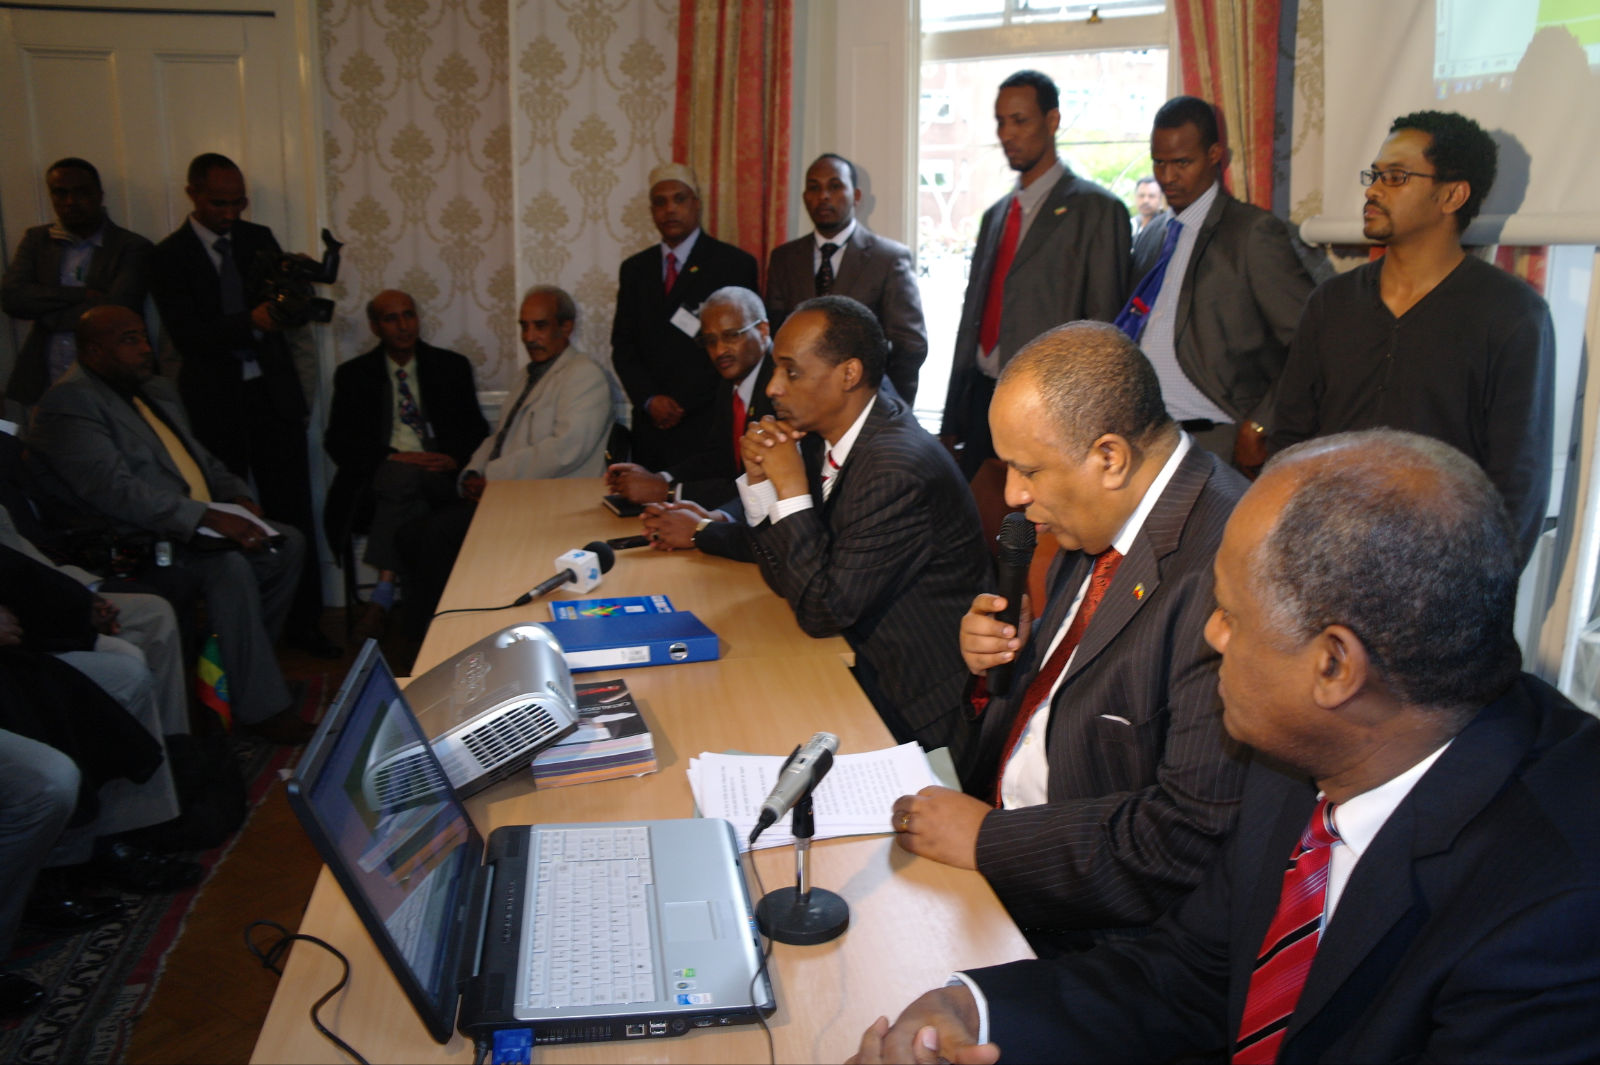 Ethiopia: UK Diplomat Responded “Britain is supporting Dictatorship“